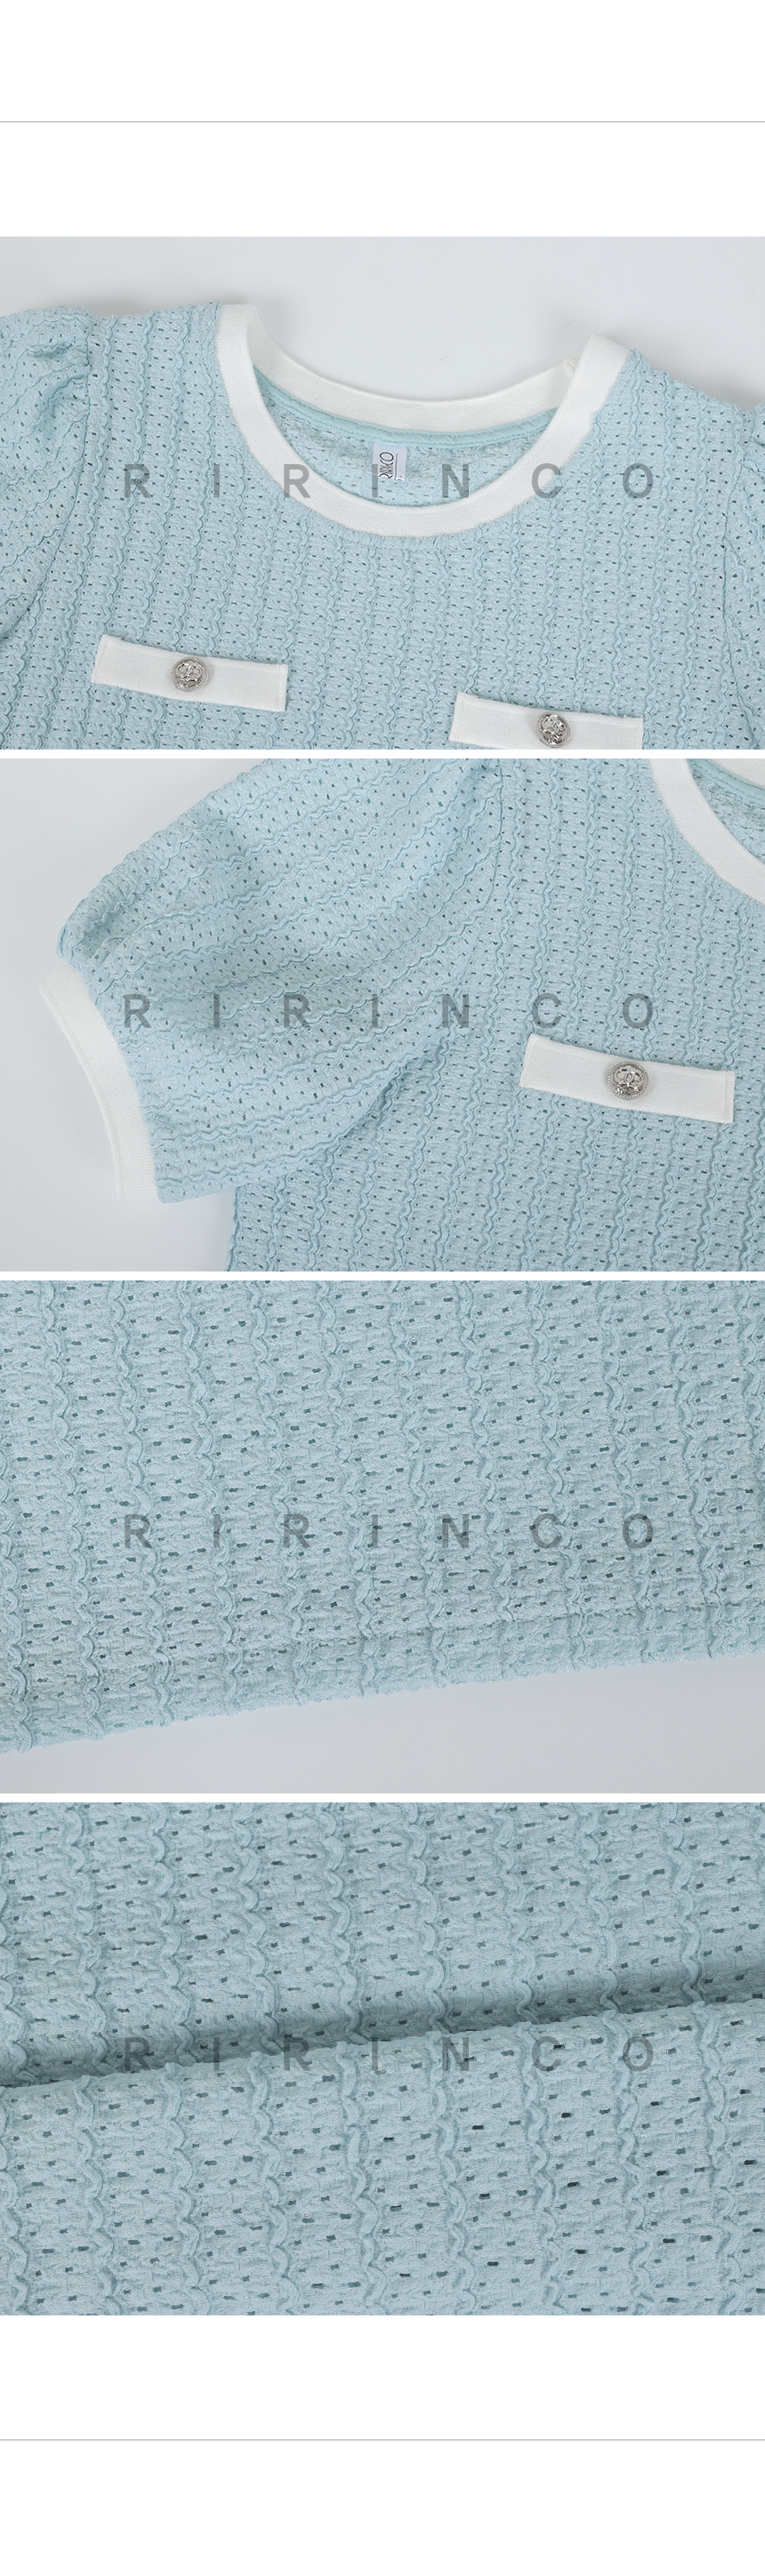 RIRINCO リンクル配色パンチングセミクロップドTシャツ